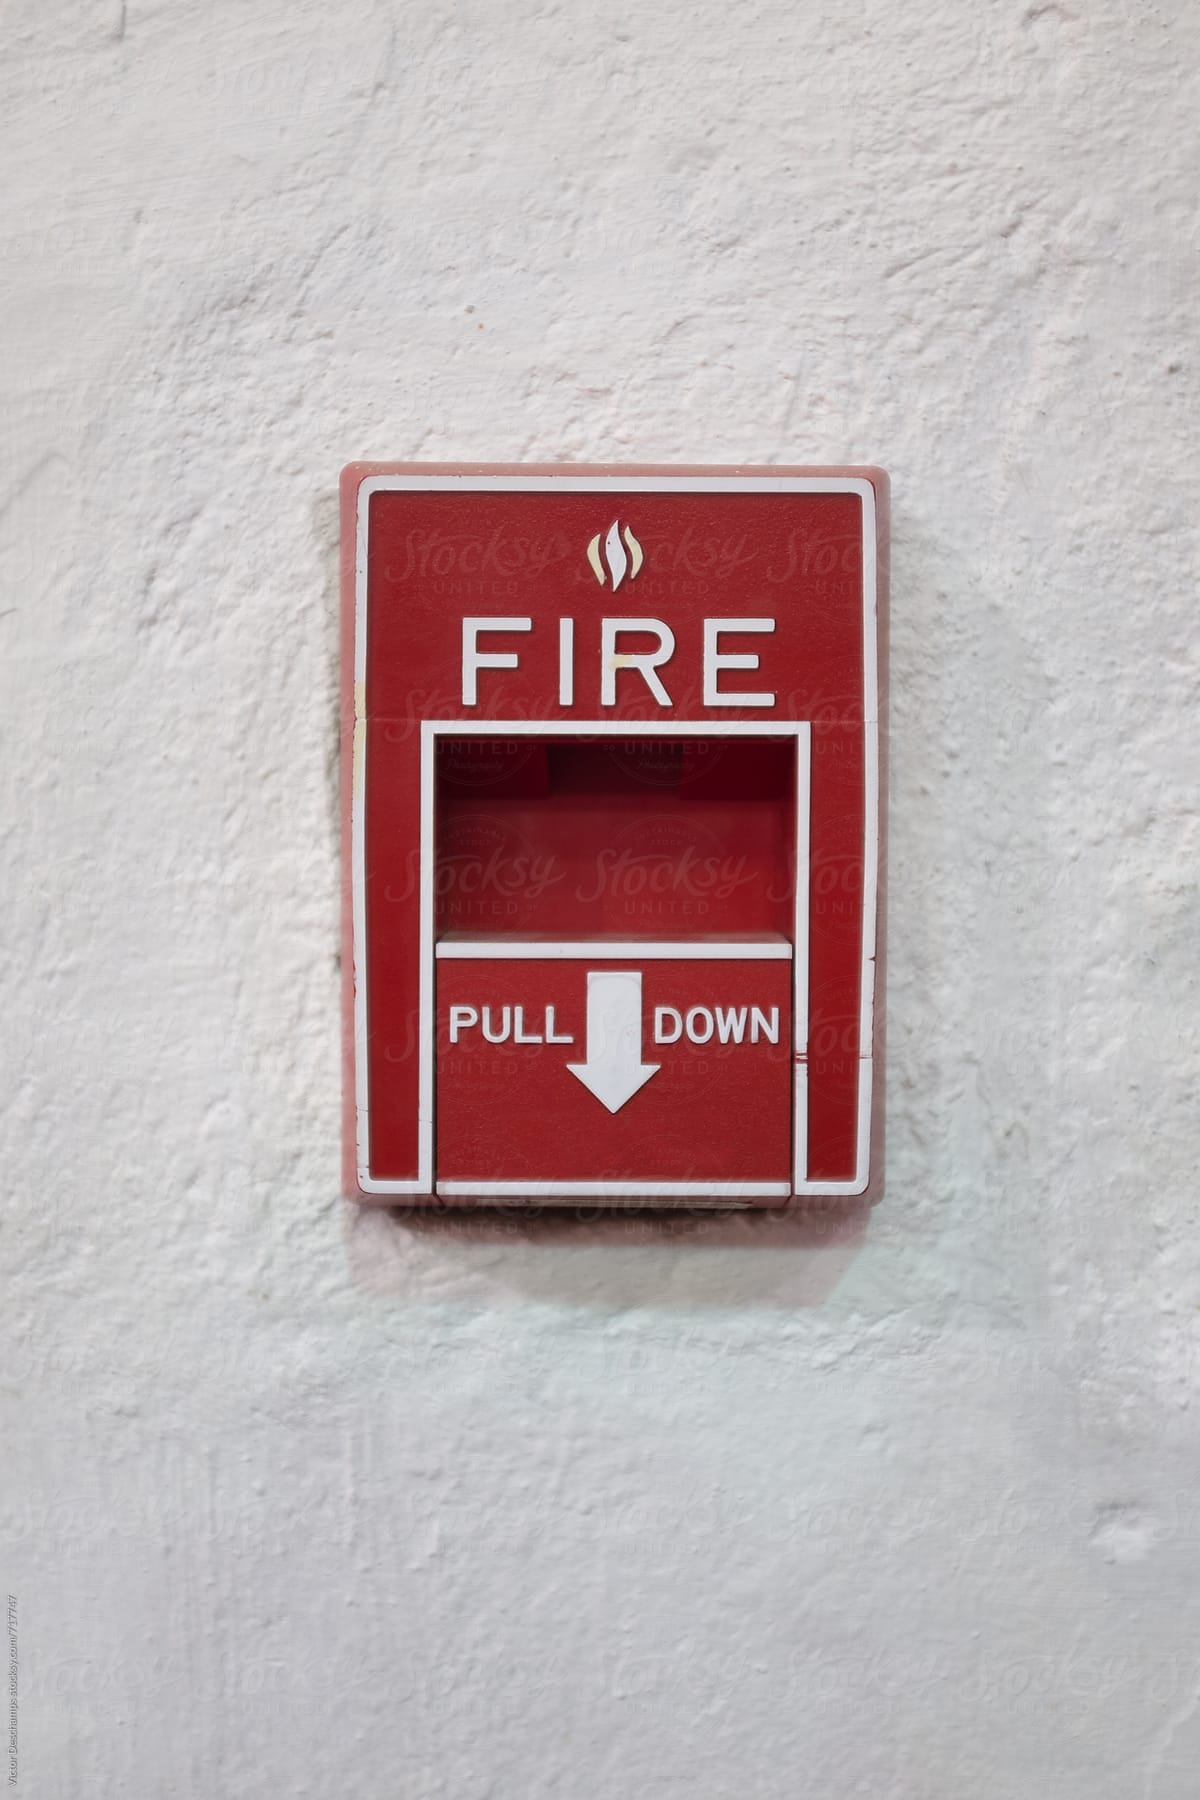 Fire alarm pull station